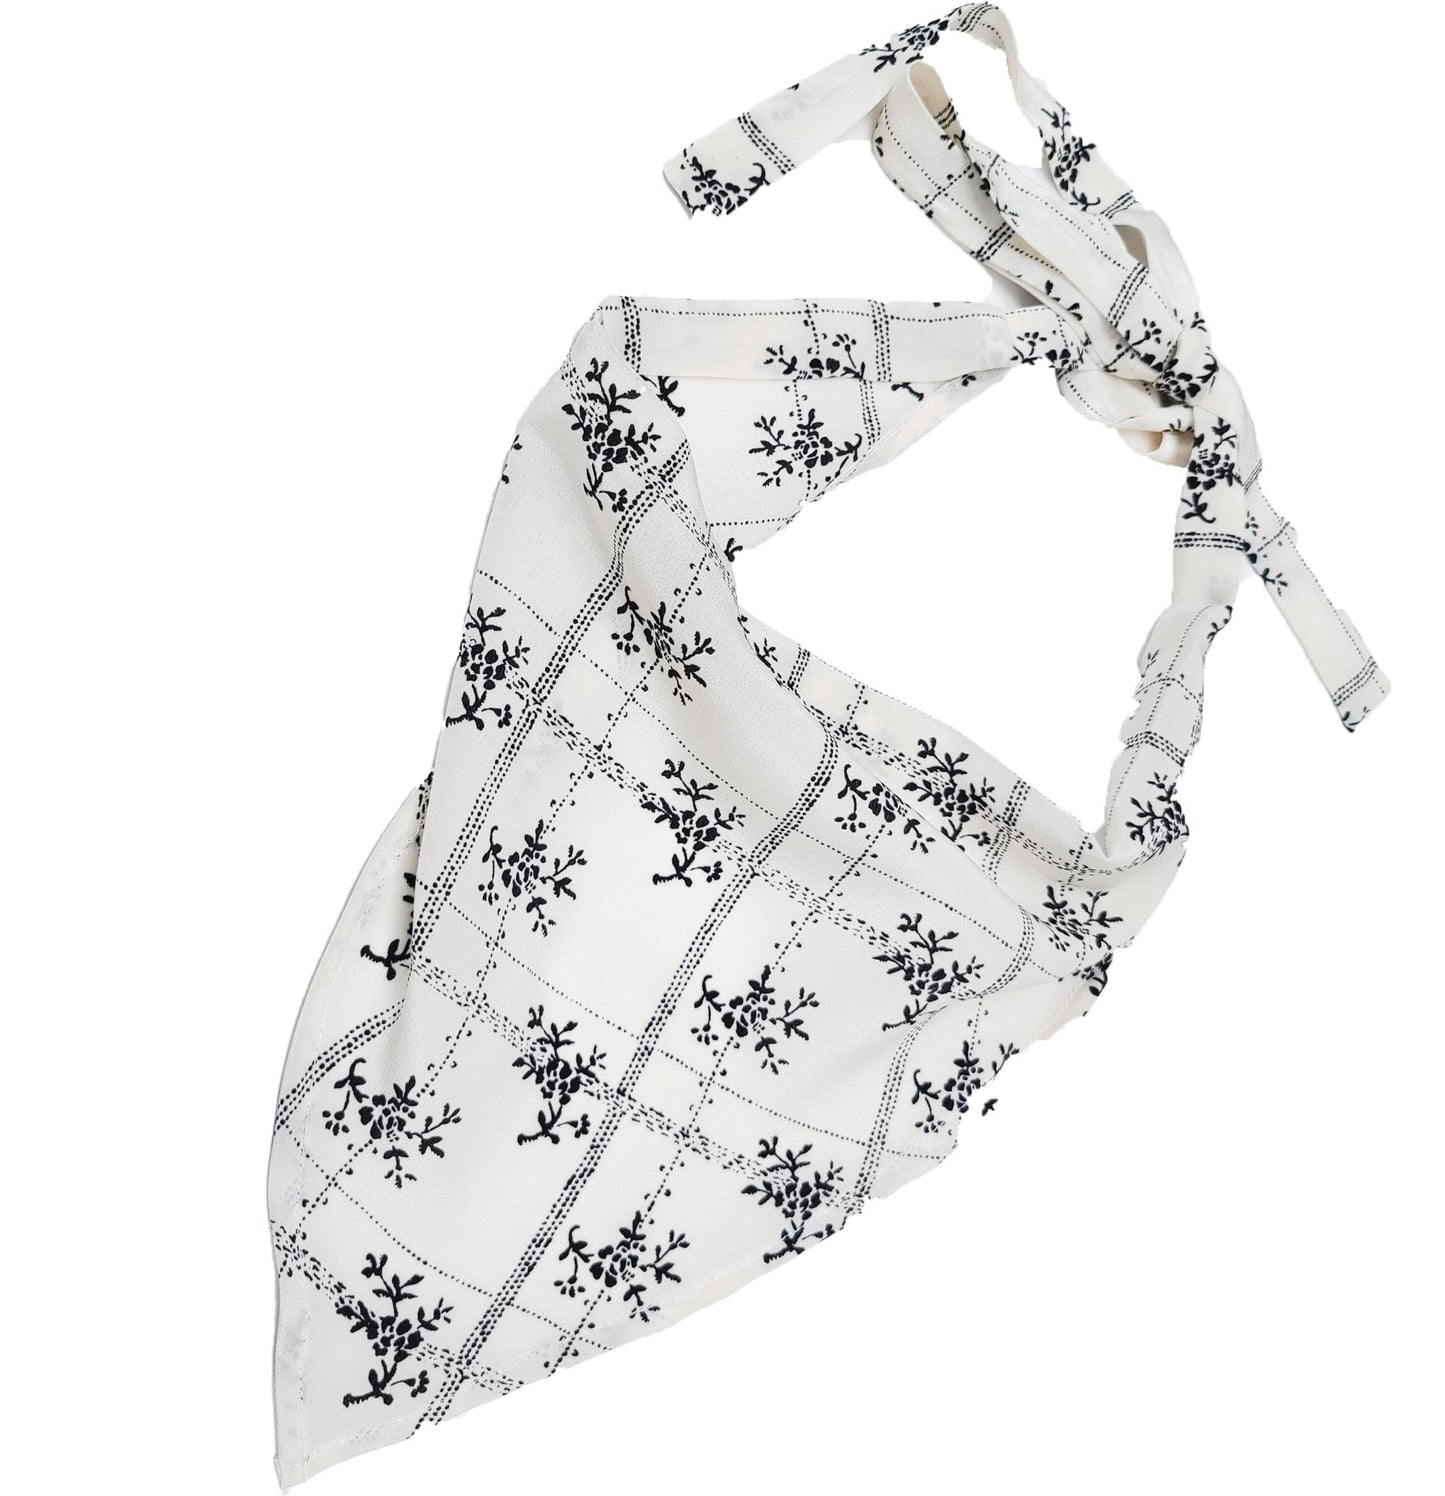 Silk Bandana Headband - White Linear Floral - Ties - RBelliard